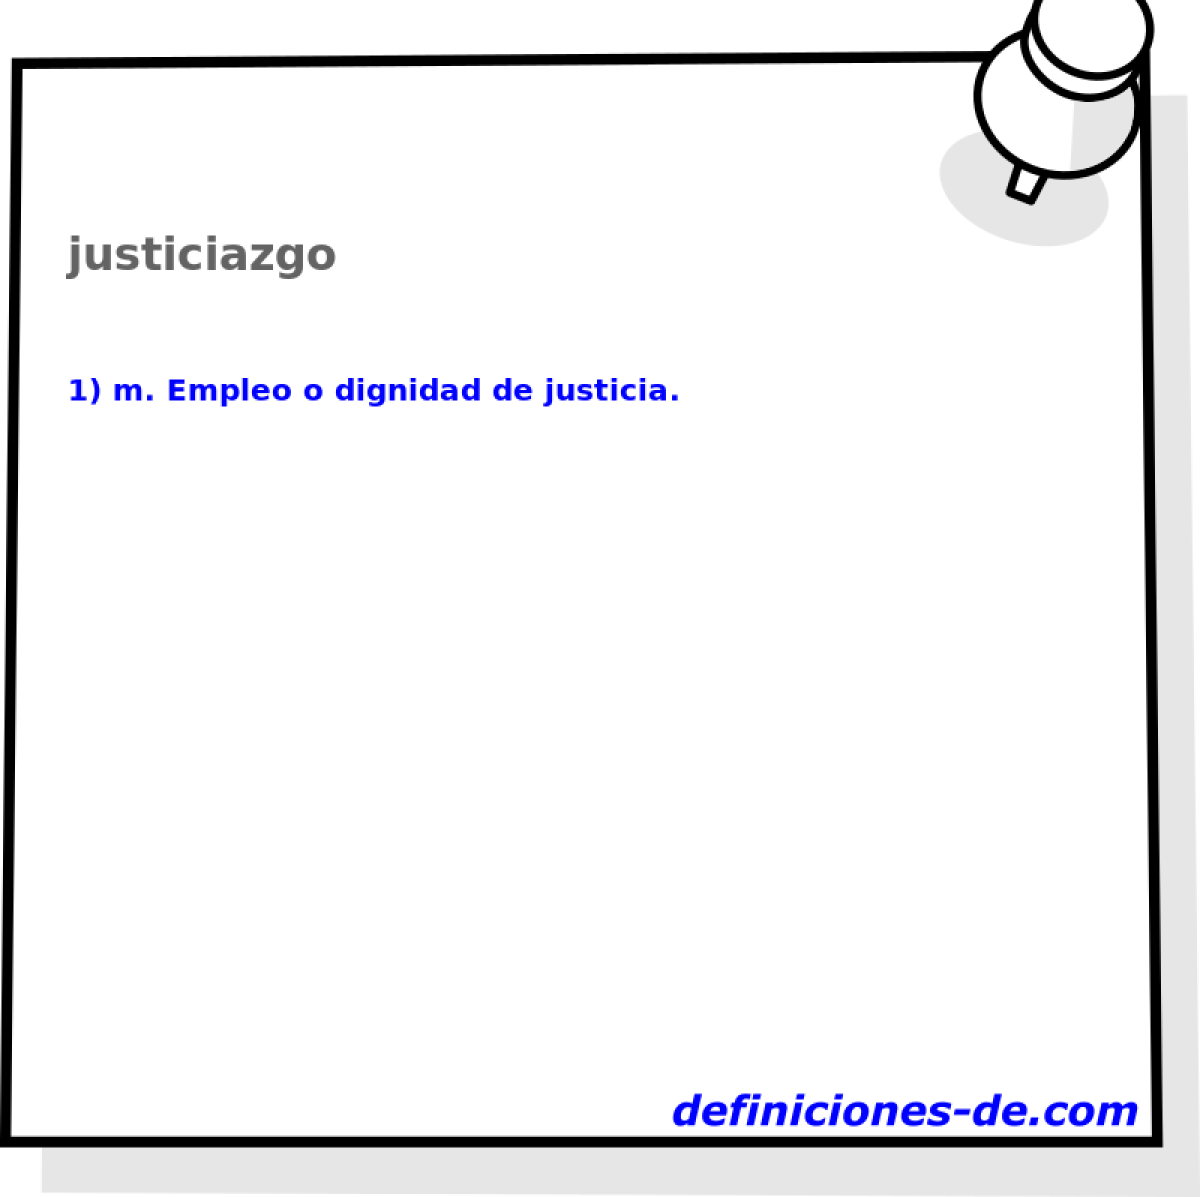 justiciazgo 